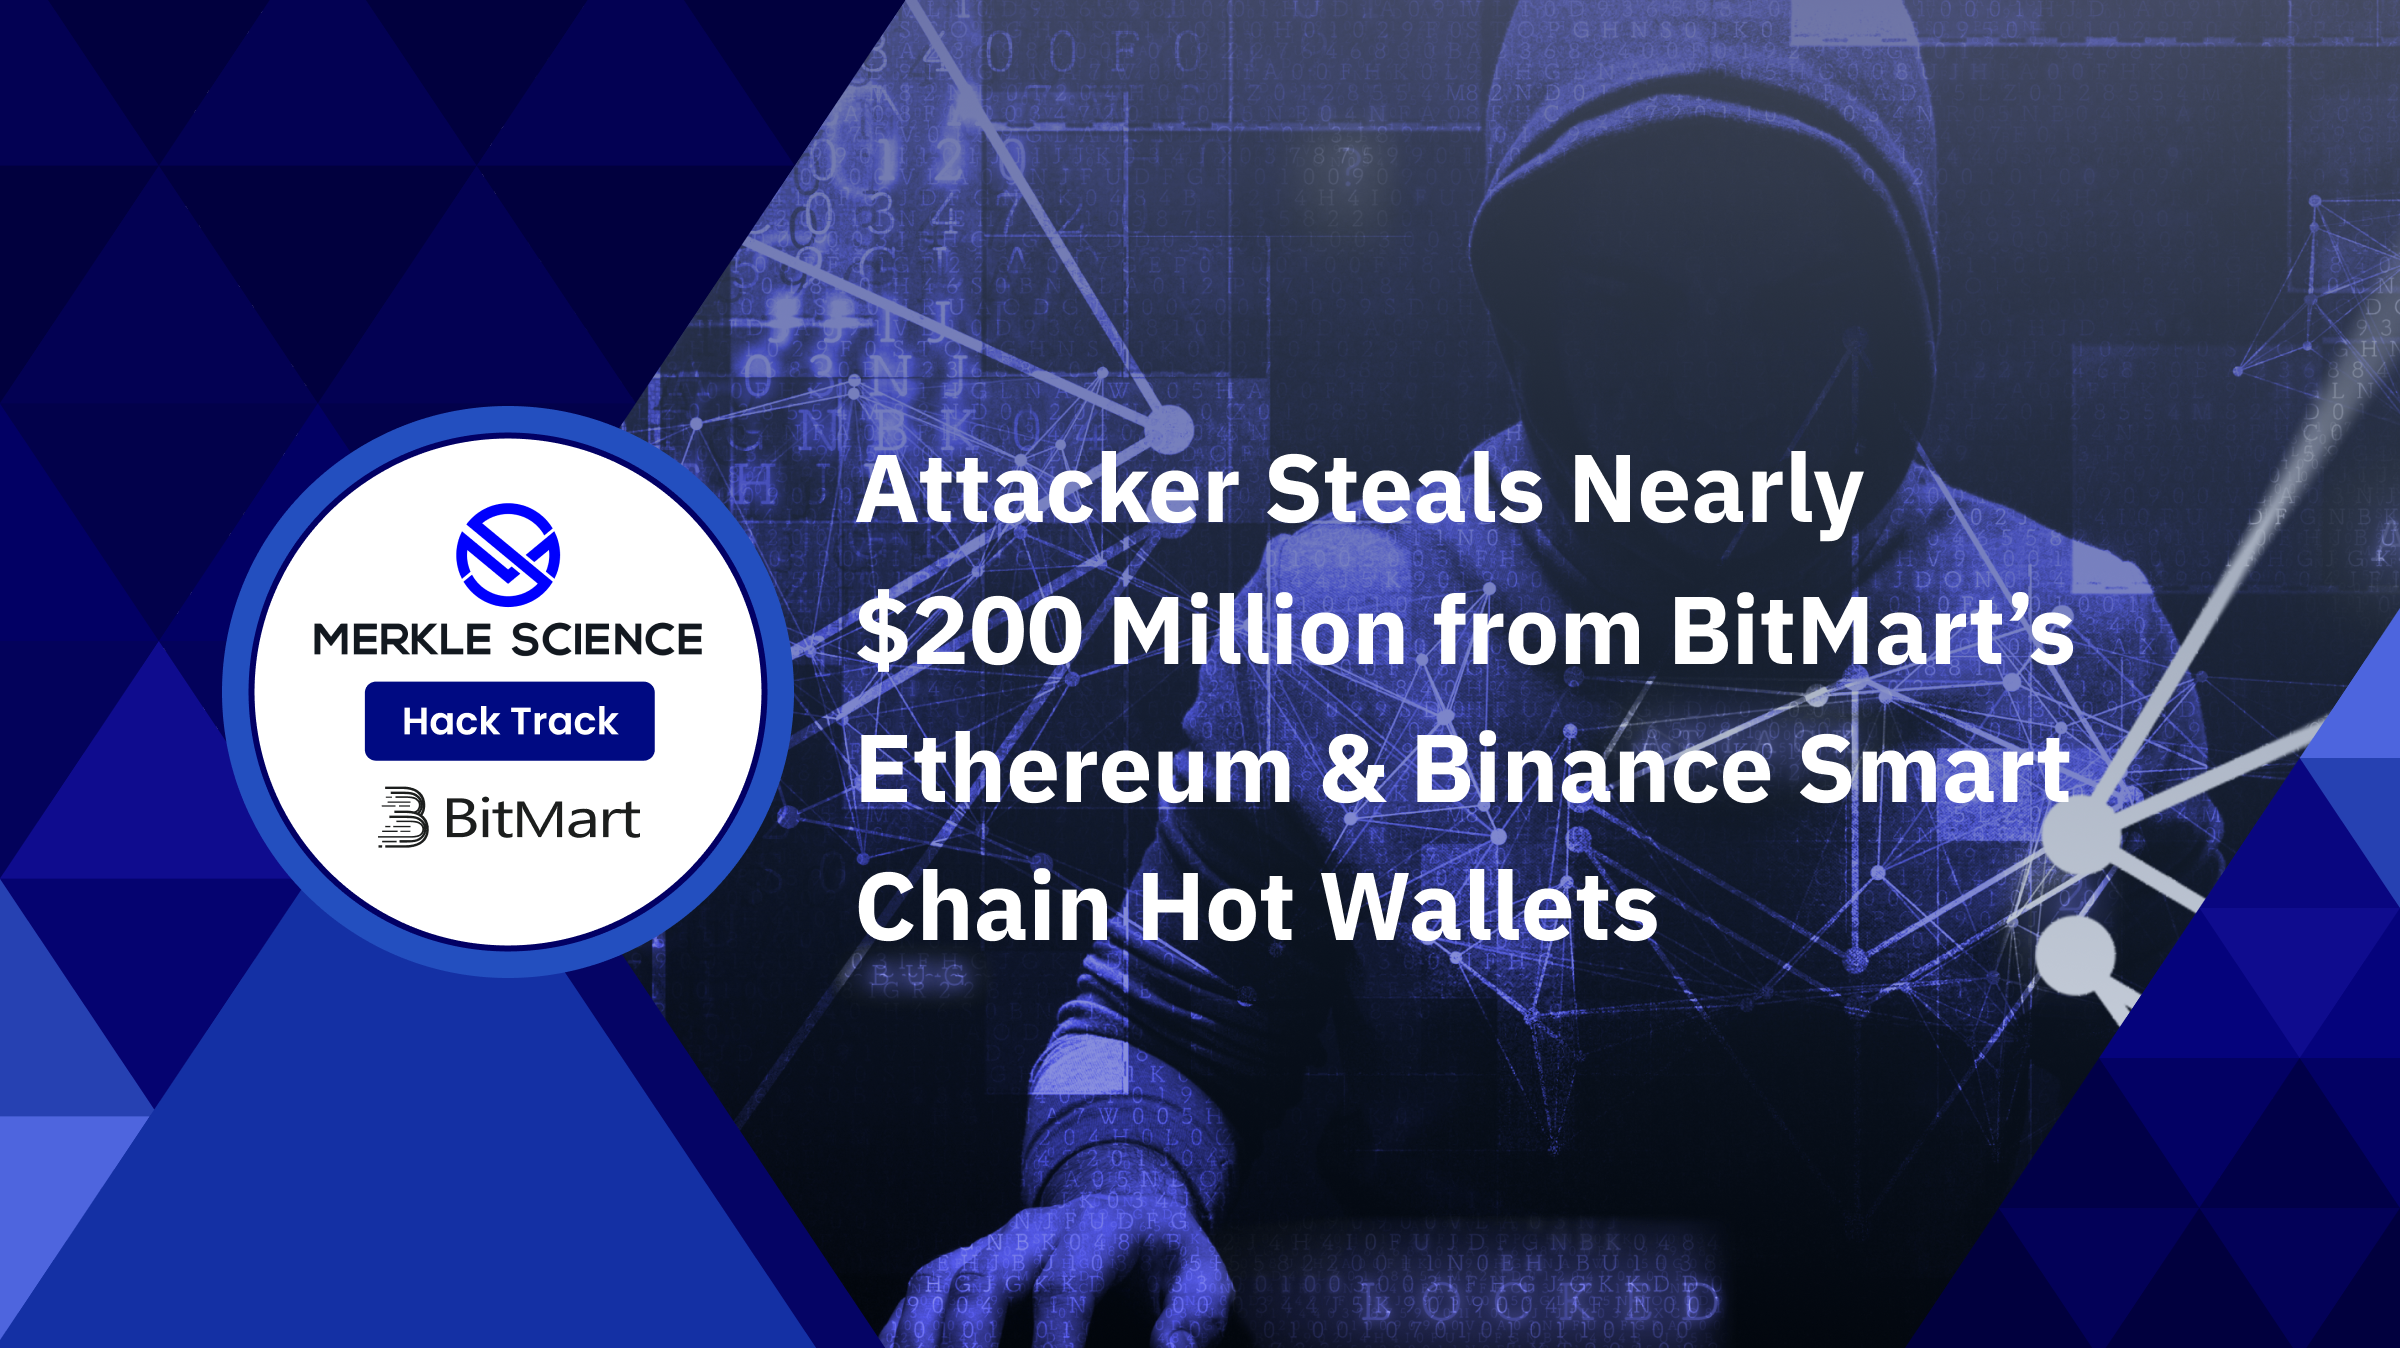 Hack Track: Analysis on BitMart Hack